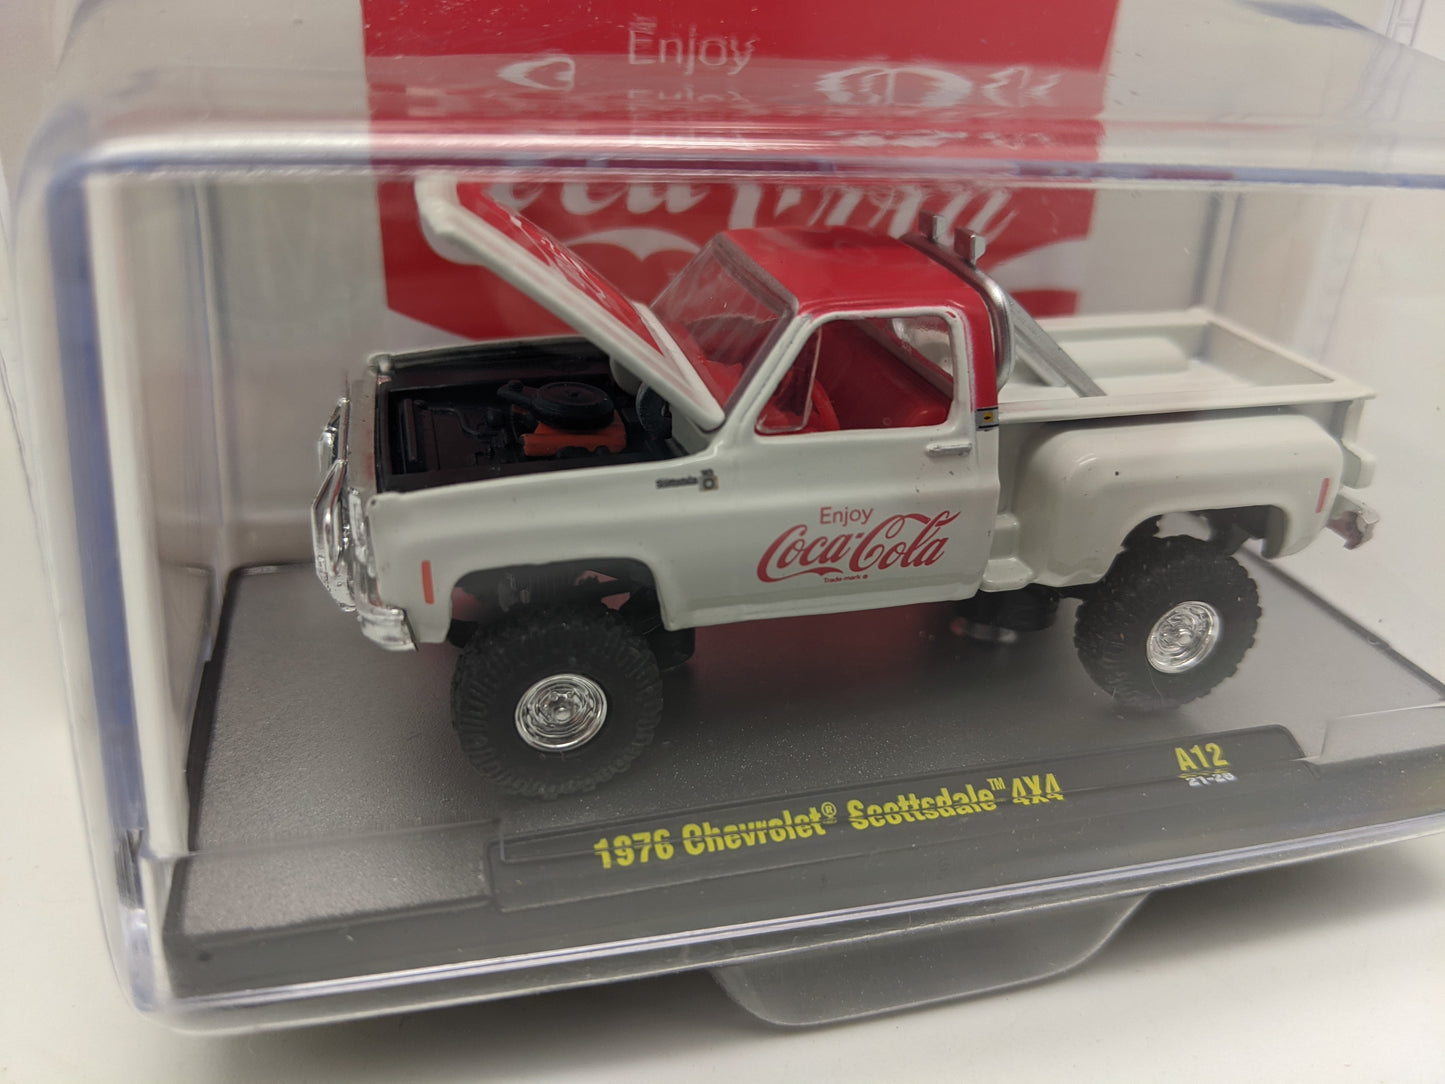 M2 1976 Chevrolet Scottsdale 4x4 - Coca-Cola